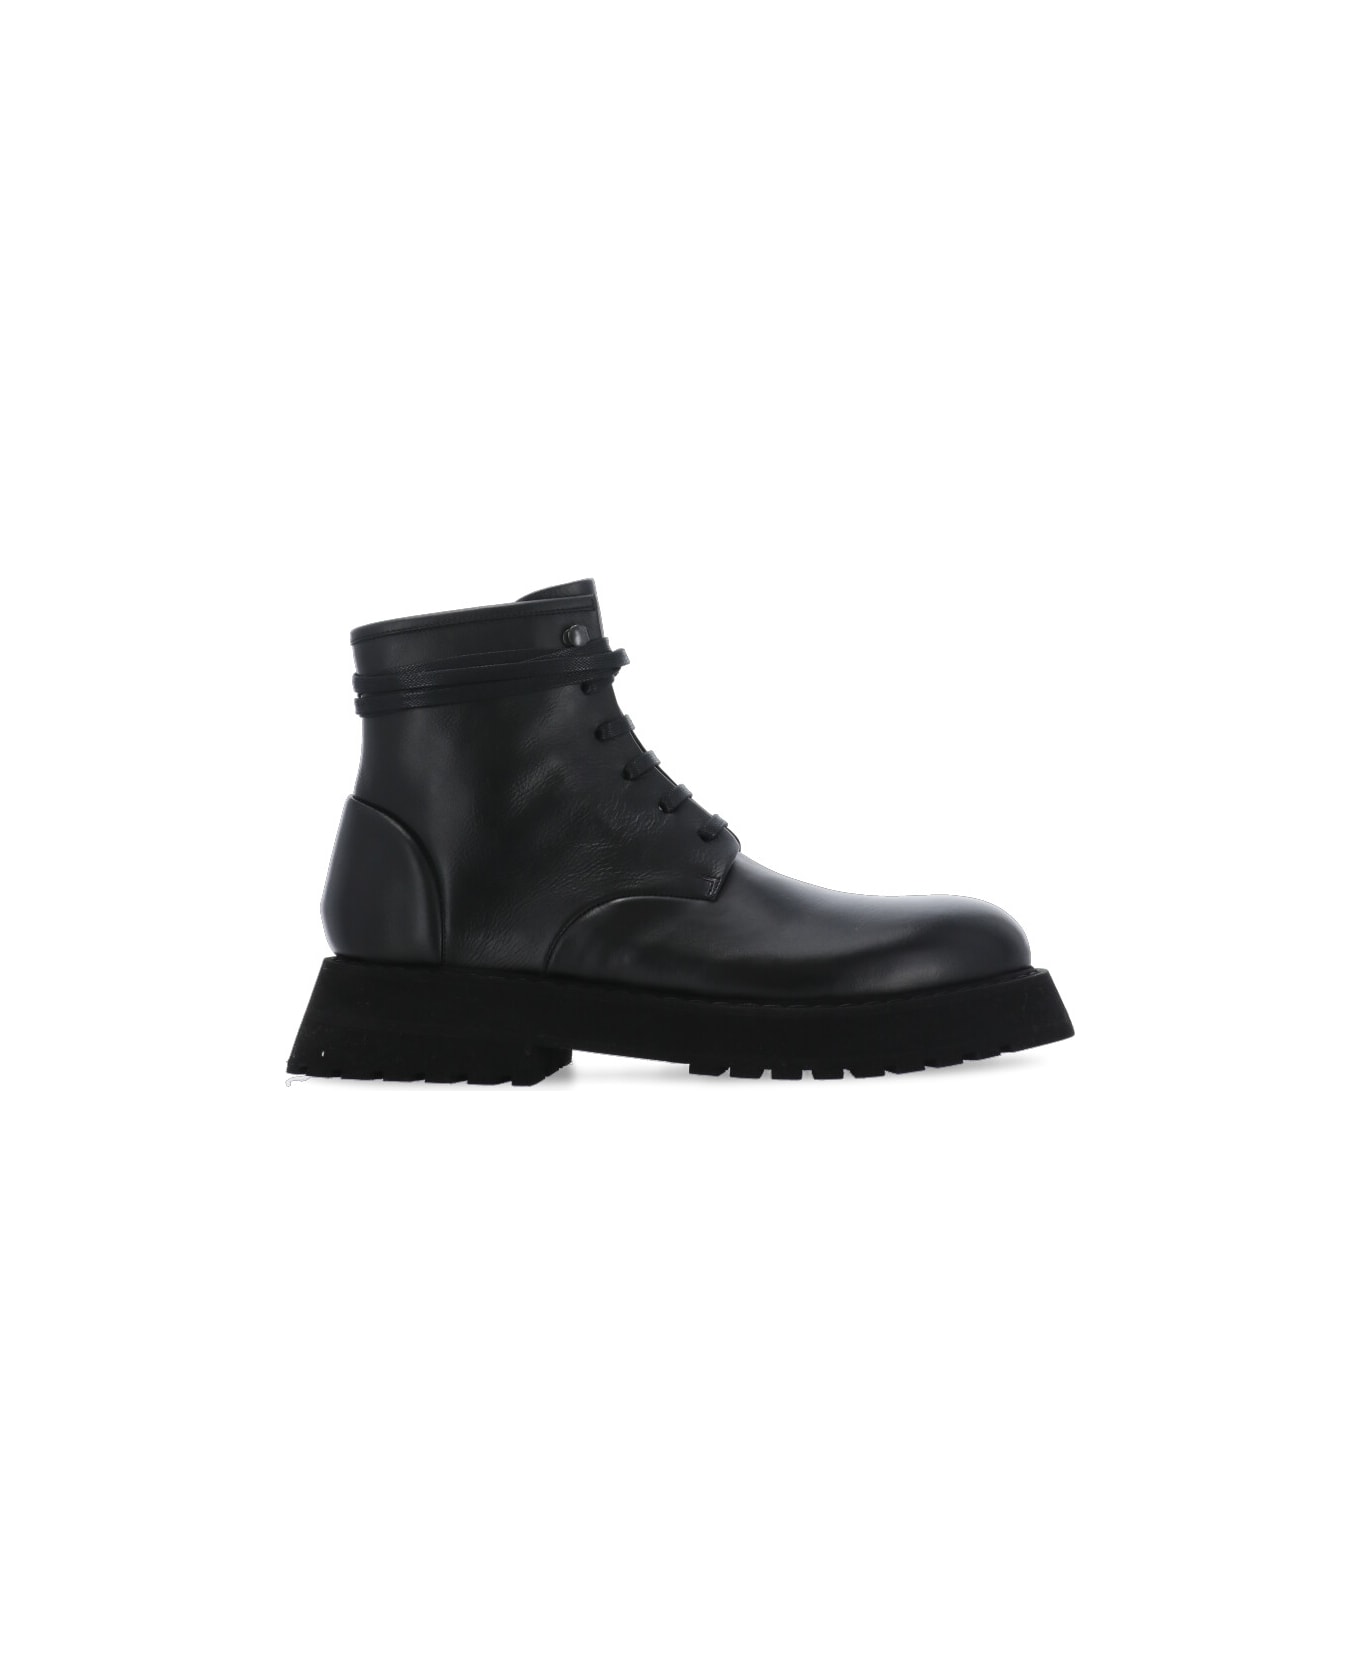 Marsell Micarro Boots - Black ブーツ